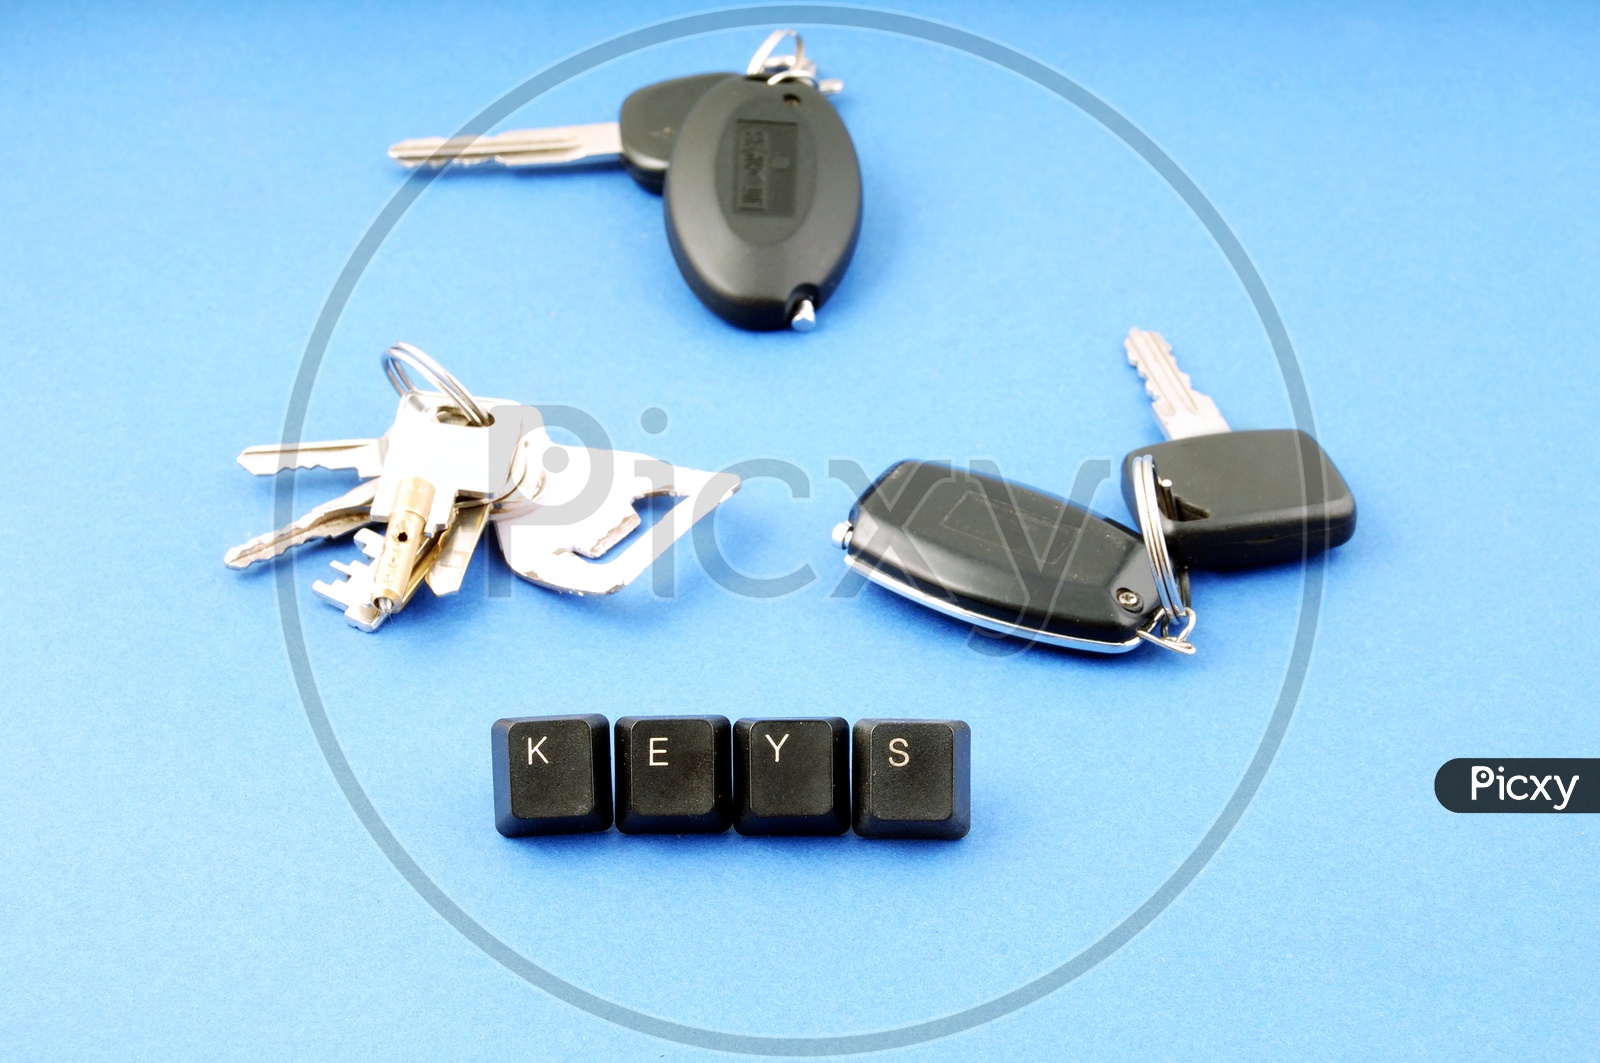 Car Keys and the keyboard keys